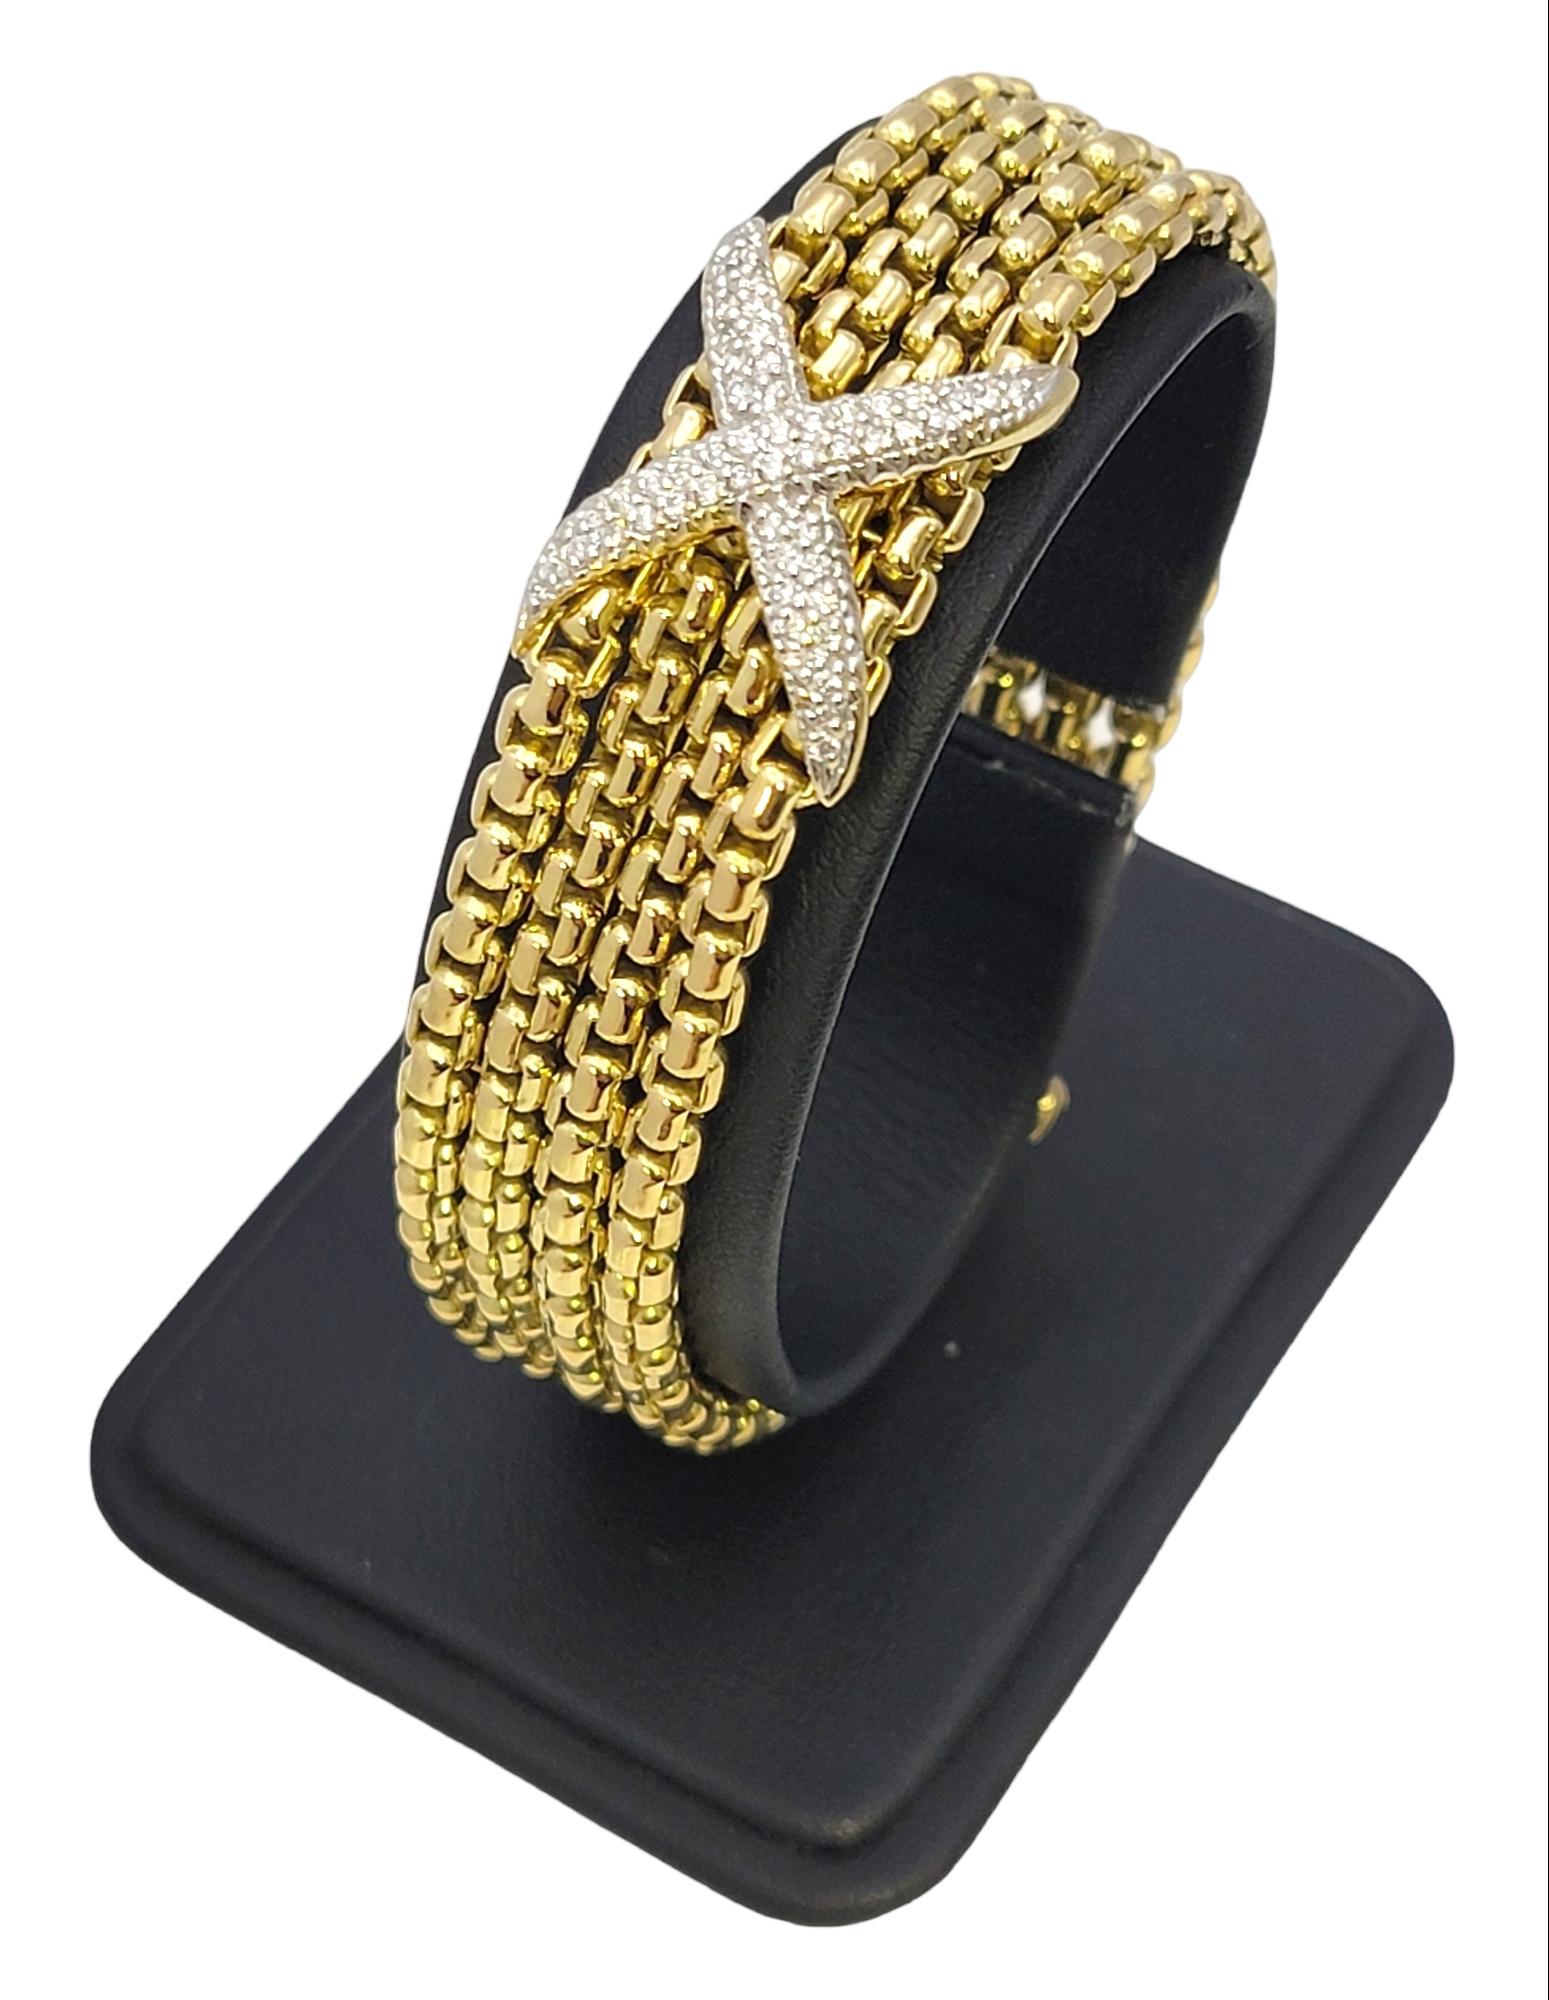 David Yurman Diamond 'x' Multi-Row Box Chain Bracelet in 18 Karat Yellow Gold For Sale 5